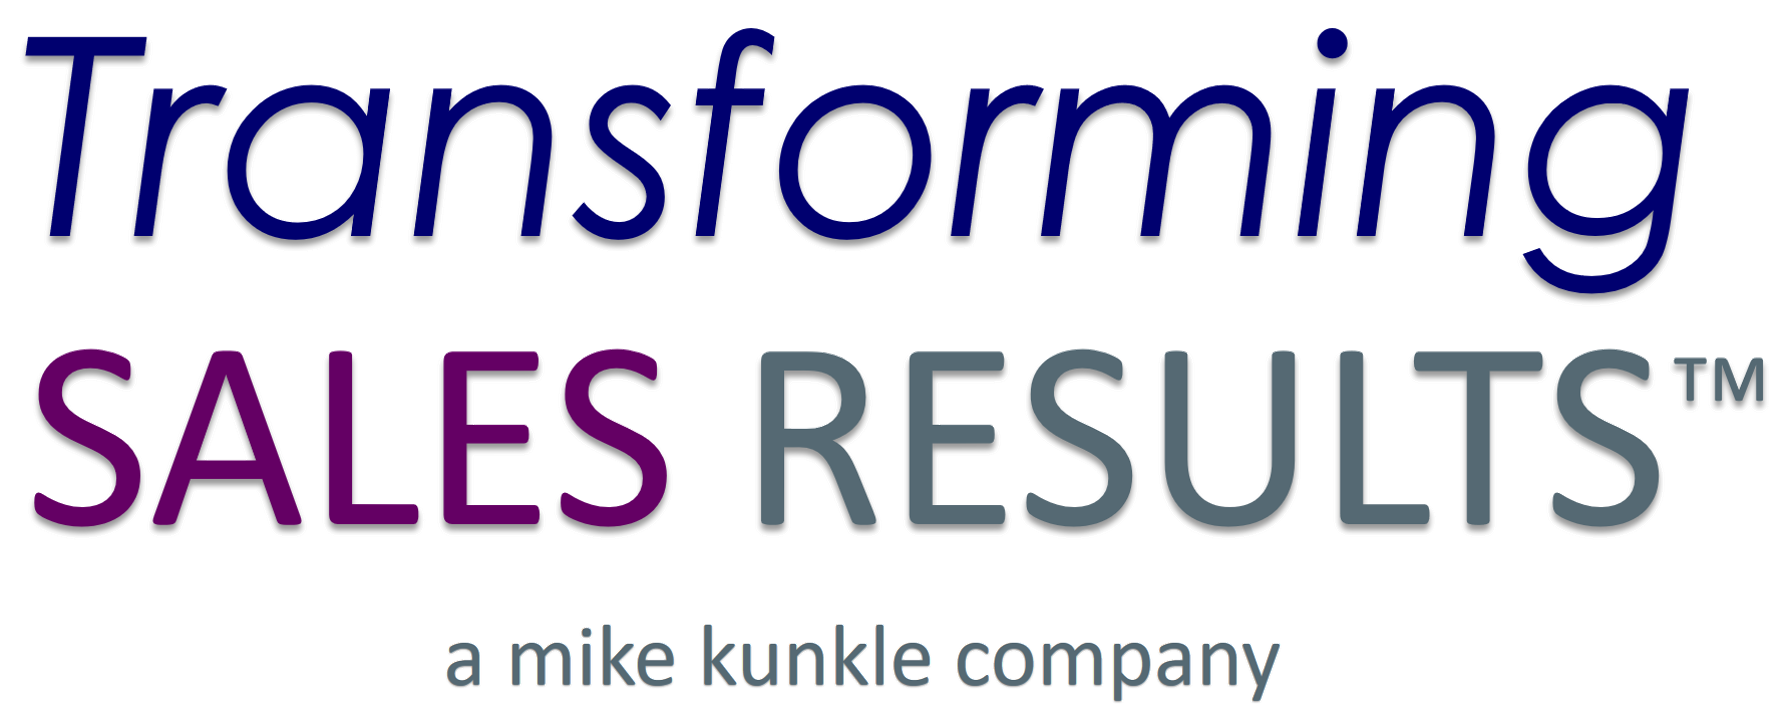 Transforming Sales Results Logo